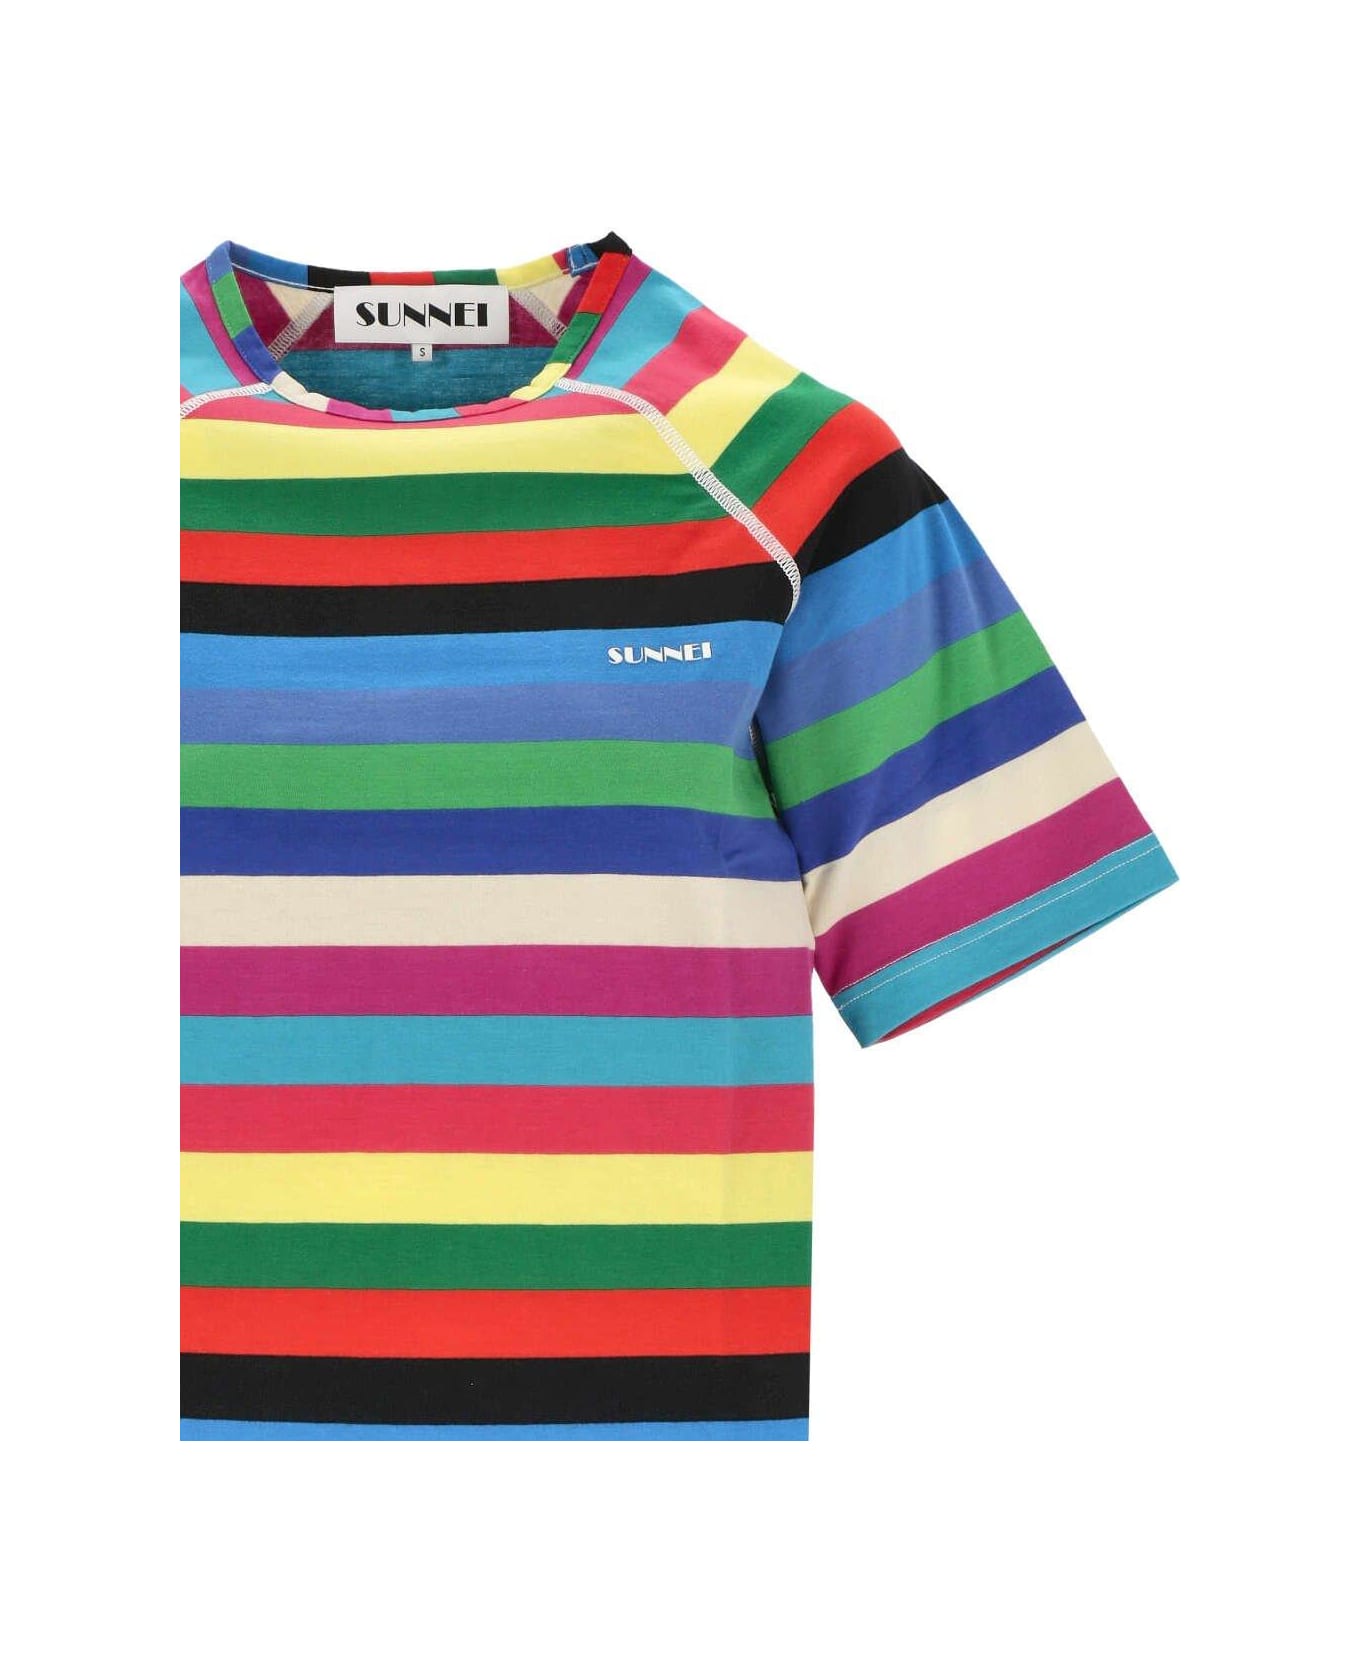 Sunnei Logo Printed Striped T-shirt - Multicolor